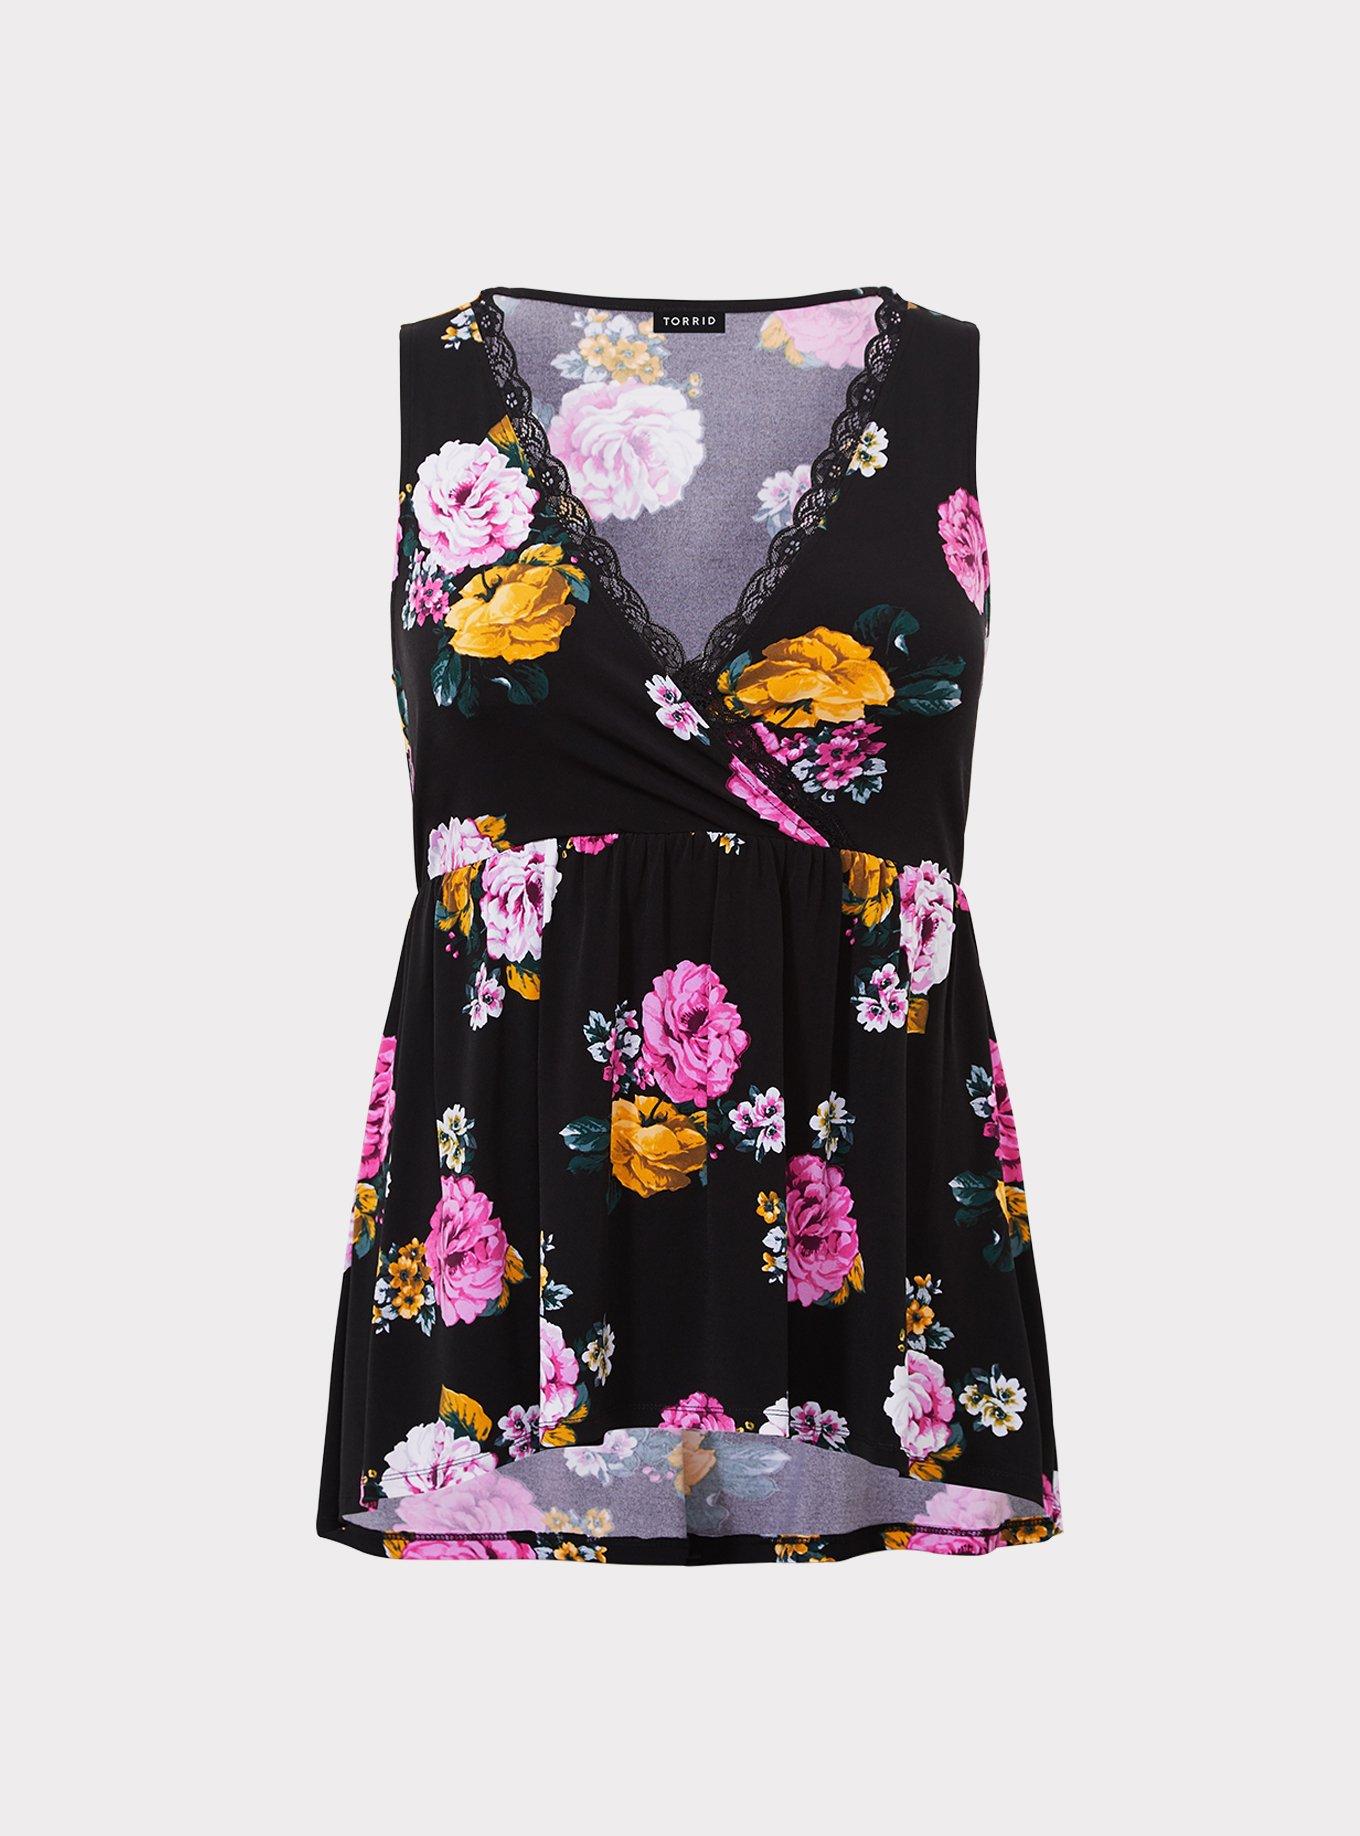 Plus Size - Black Floral Studio Knit Babydoll Top - Torrid